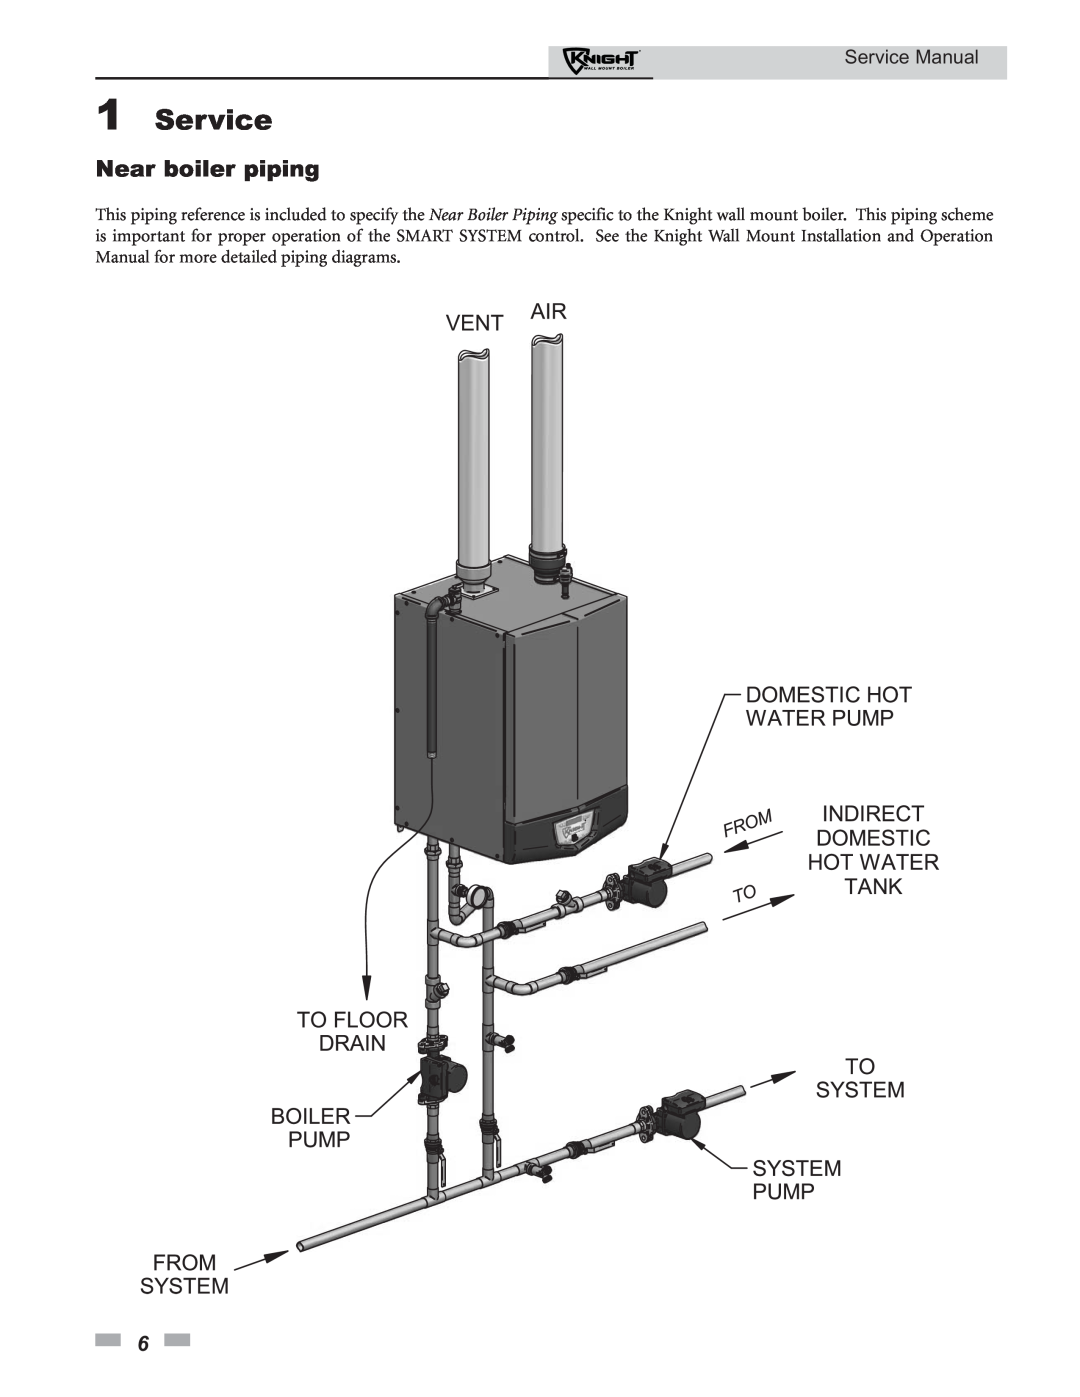 Lochinvar 50-210 service manual Near boiler piping, Service Manual 